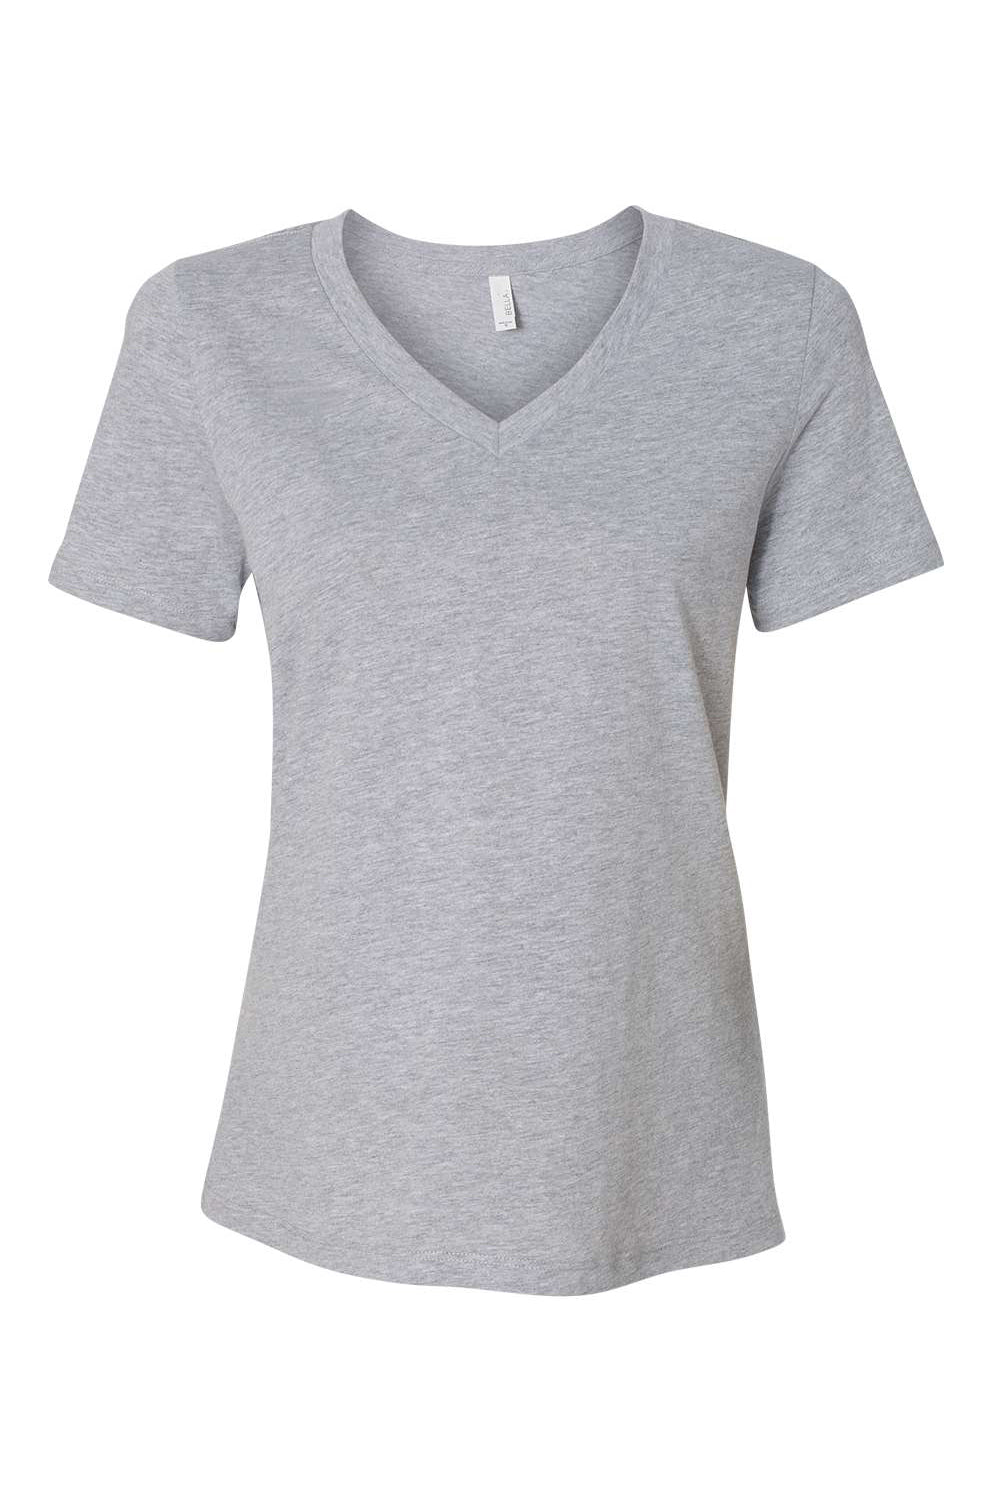 Bella + Canvas BC6405CVC Womens Relaxed Jersey Short Sleeve V-Neck T-Shirt Heather Grey Flat Front